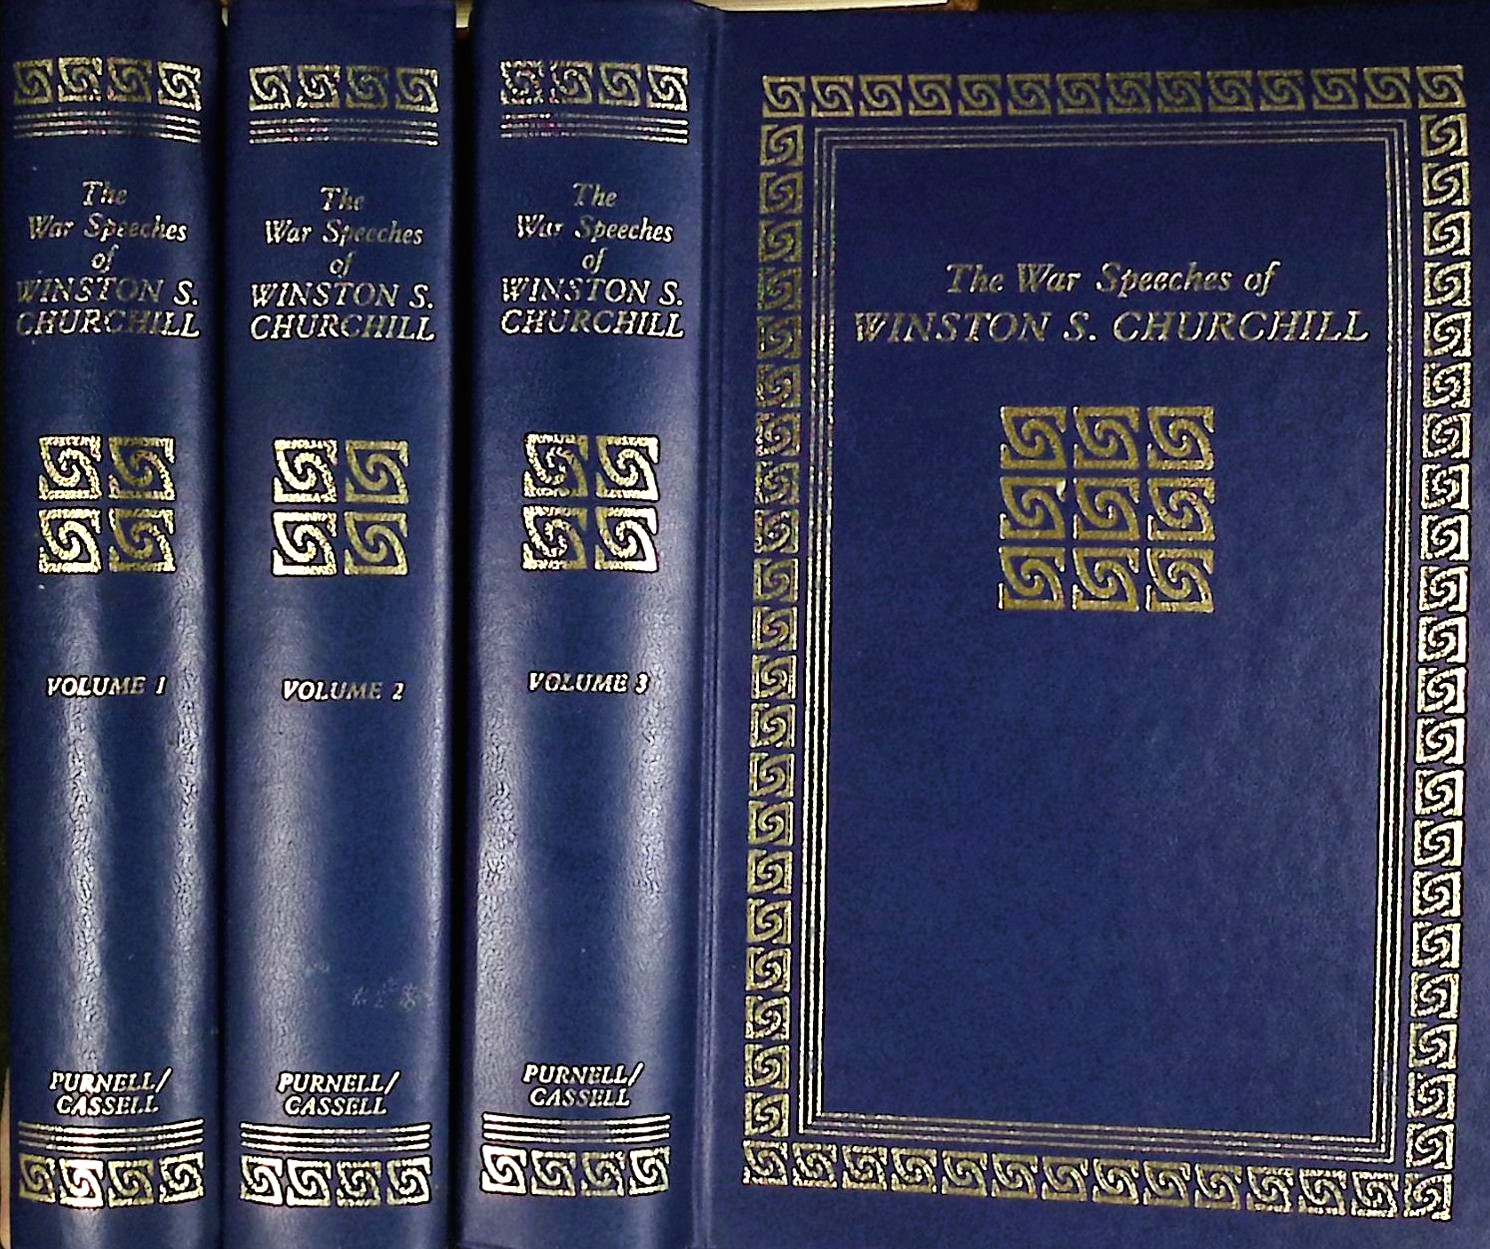 The War Speeches of the Rt Hon Winston S Churchill. 3 volume set.